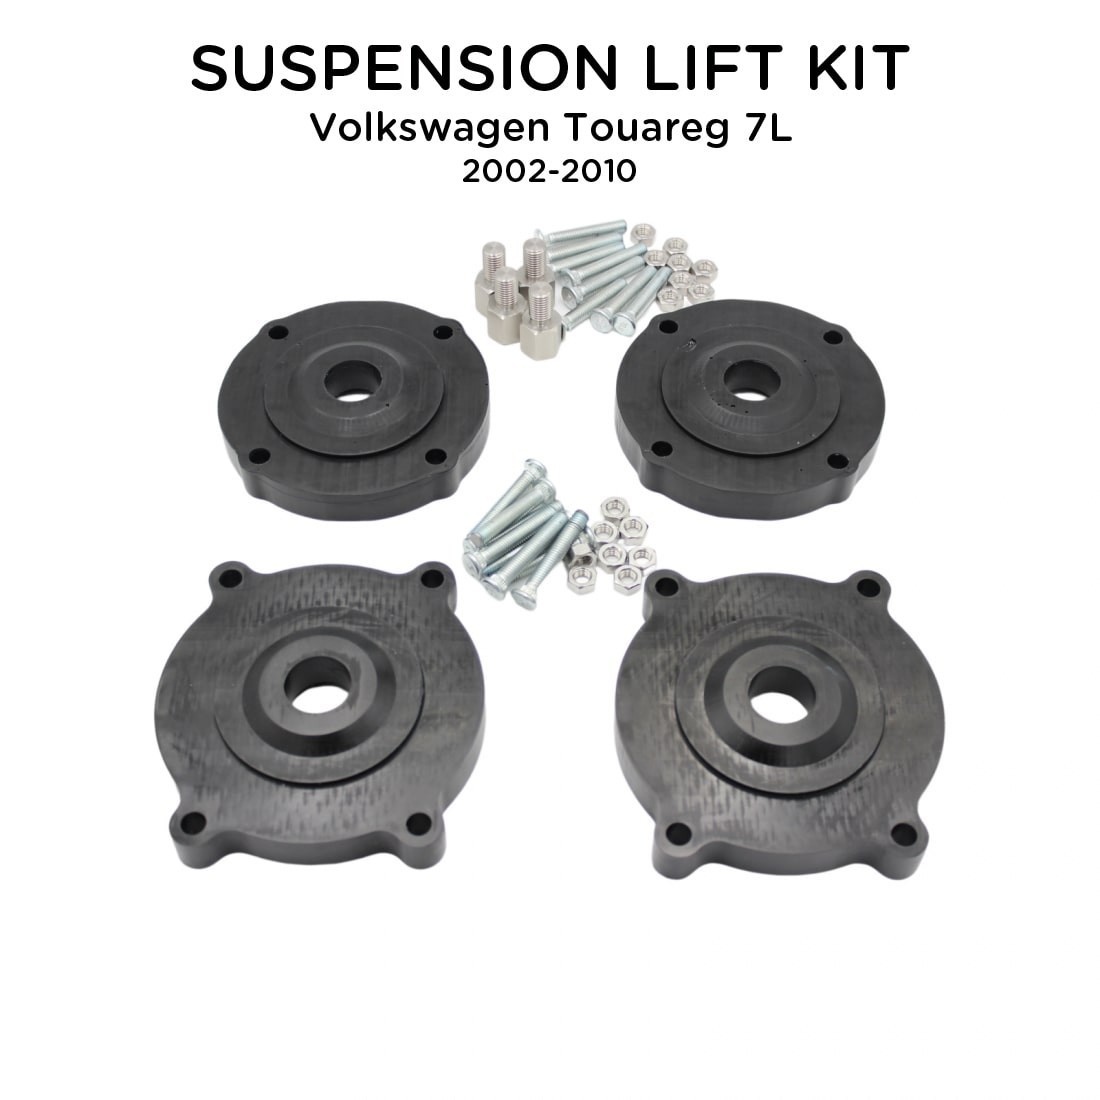 Suspension Lift Kit For Volkswagen Touareg 7L 2002-2010